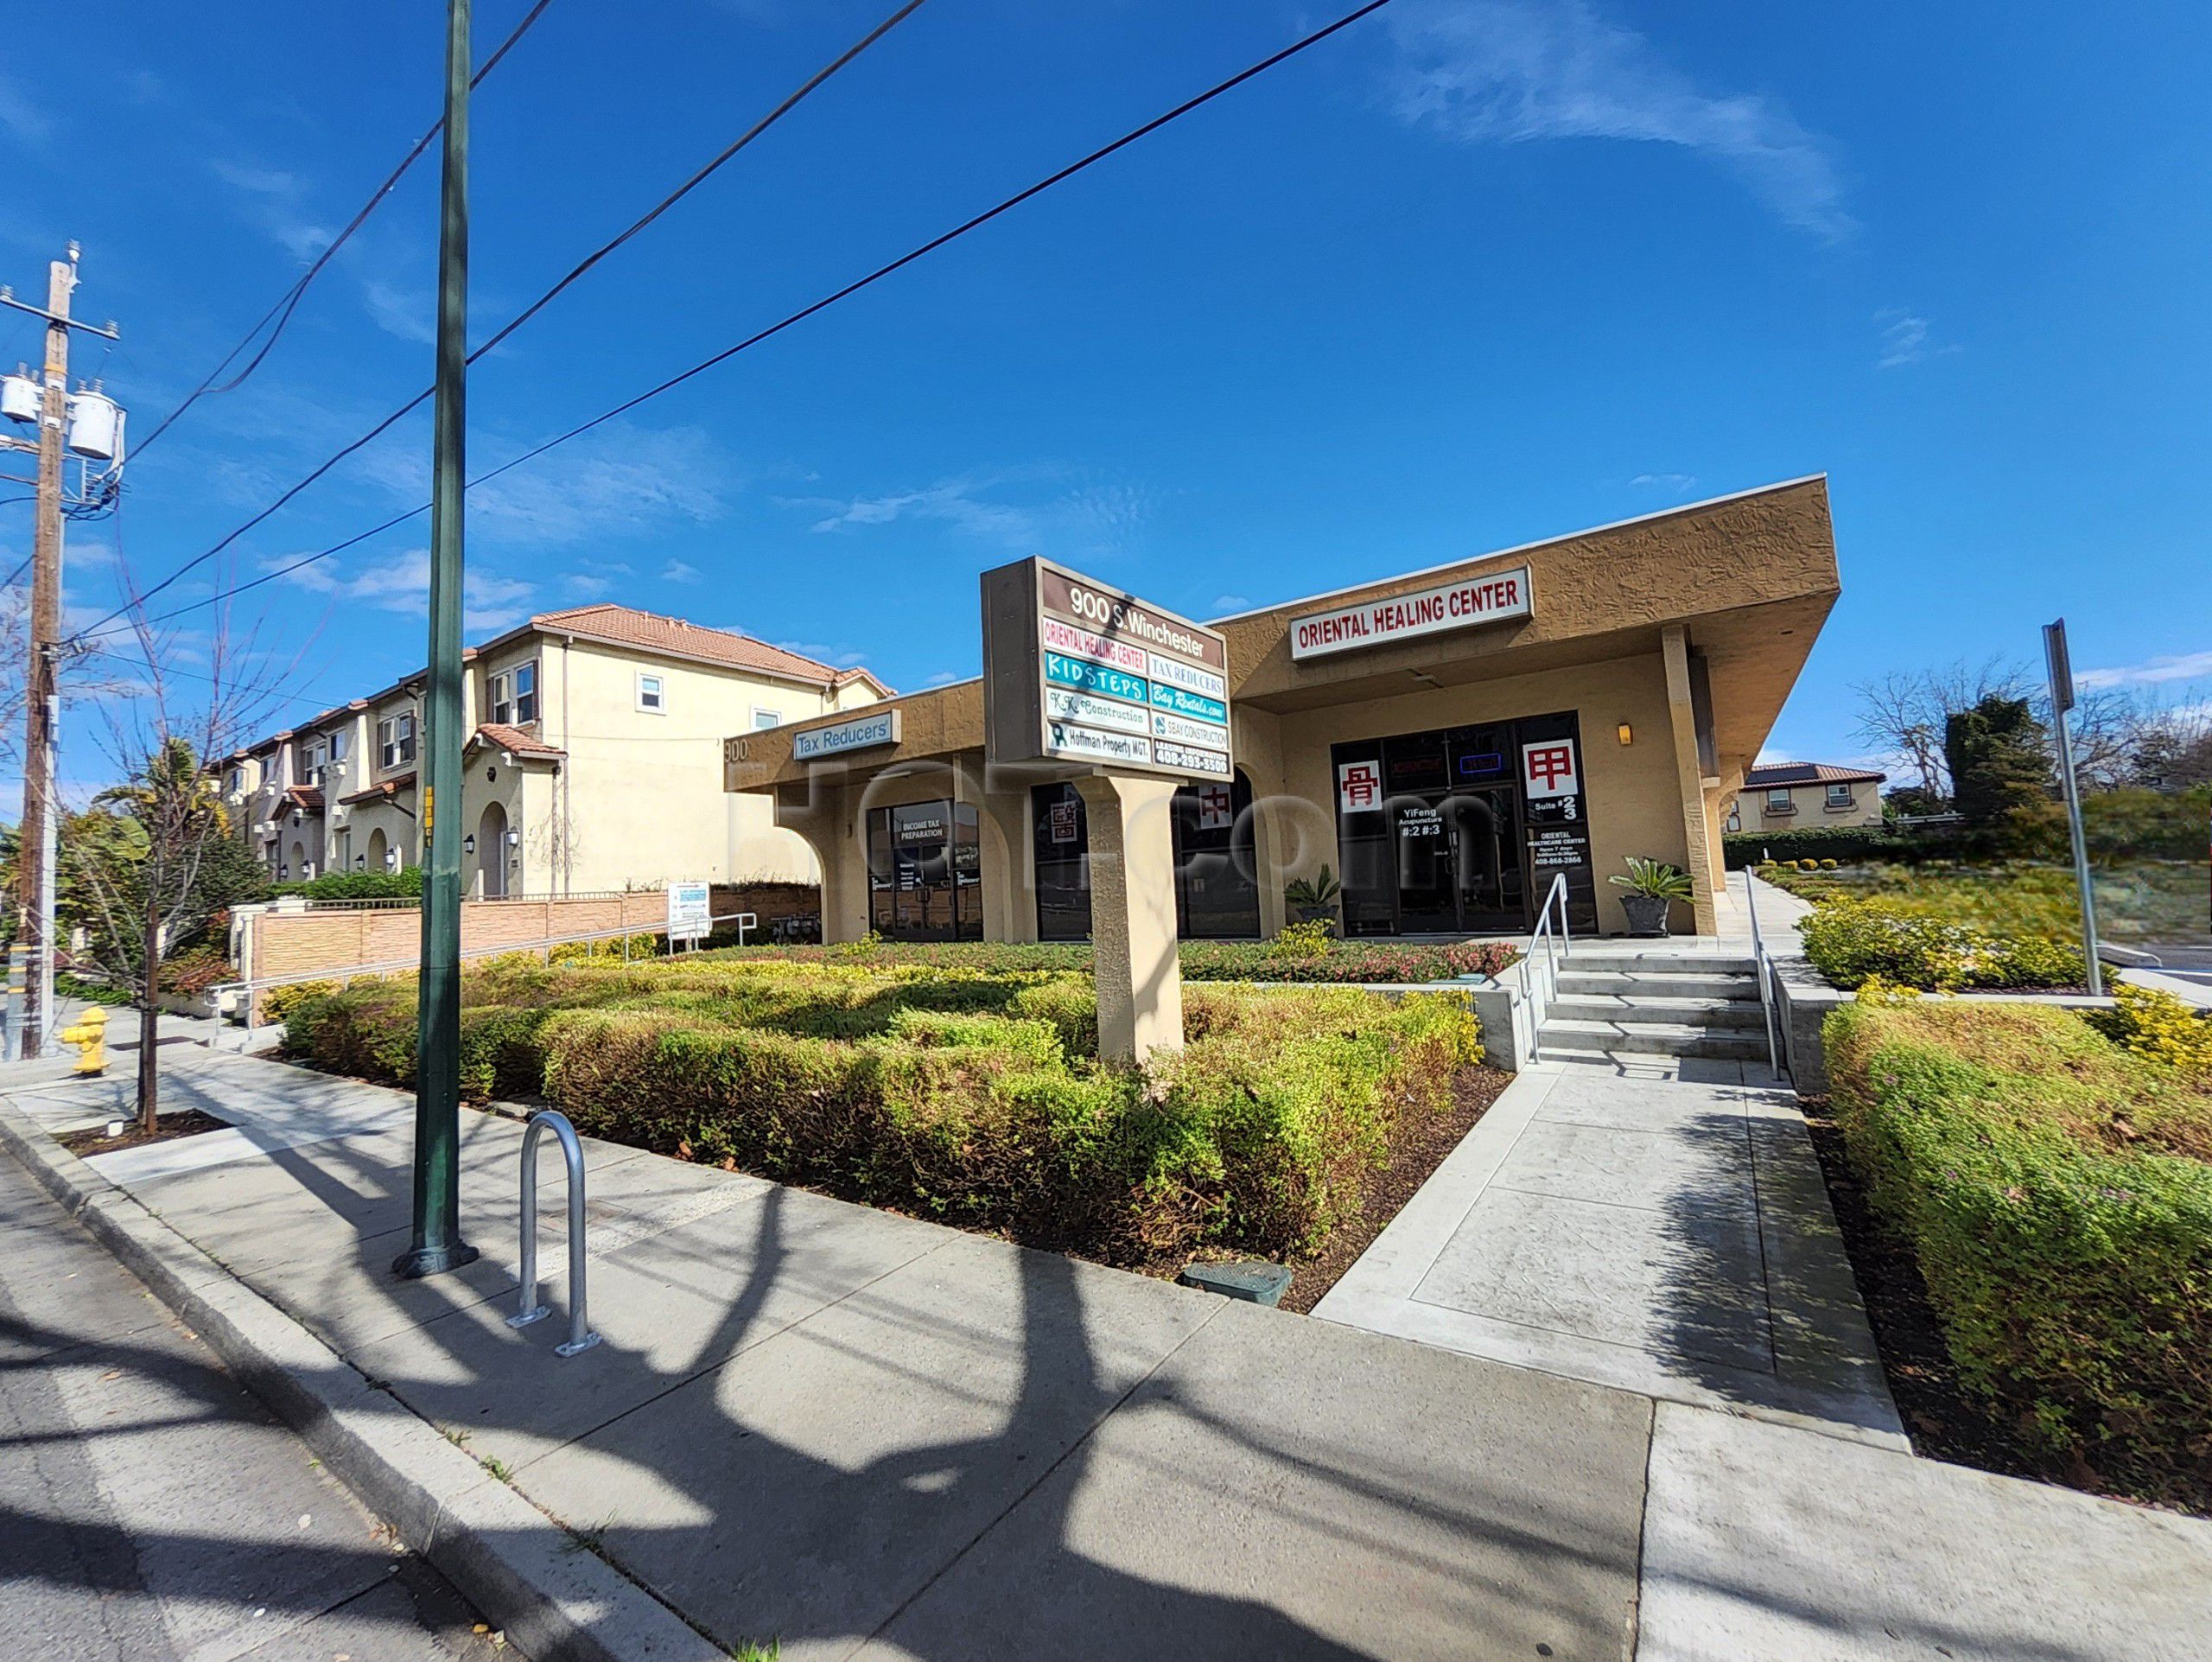 San Jose, California Oriental Healing Center